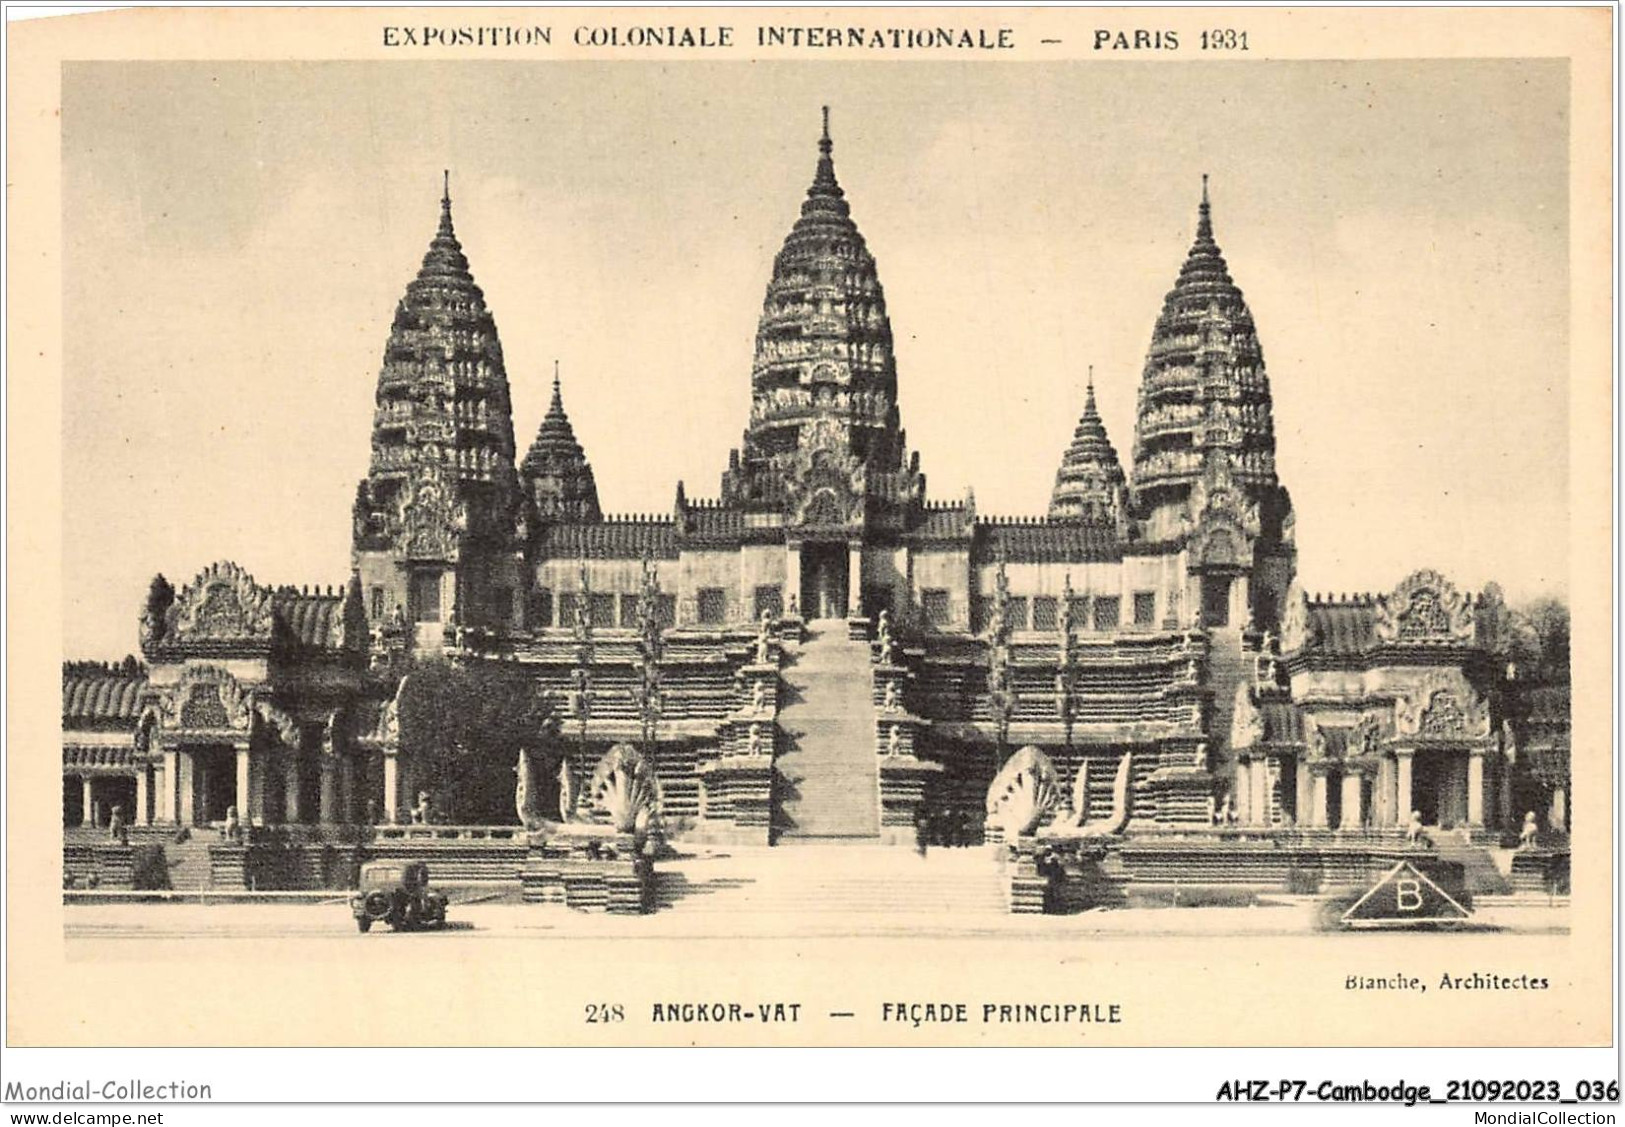 AHZP7-CAMBODGE-0614 - EXPOSITION COLONIALE INTERNATIONALE - PARIS 1931 - ANGKOR-VAT - FACADE PRINCIPALE - Cambodia